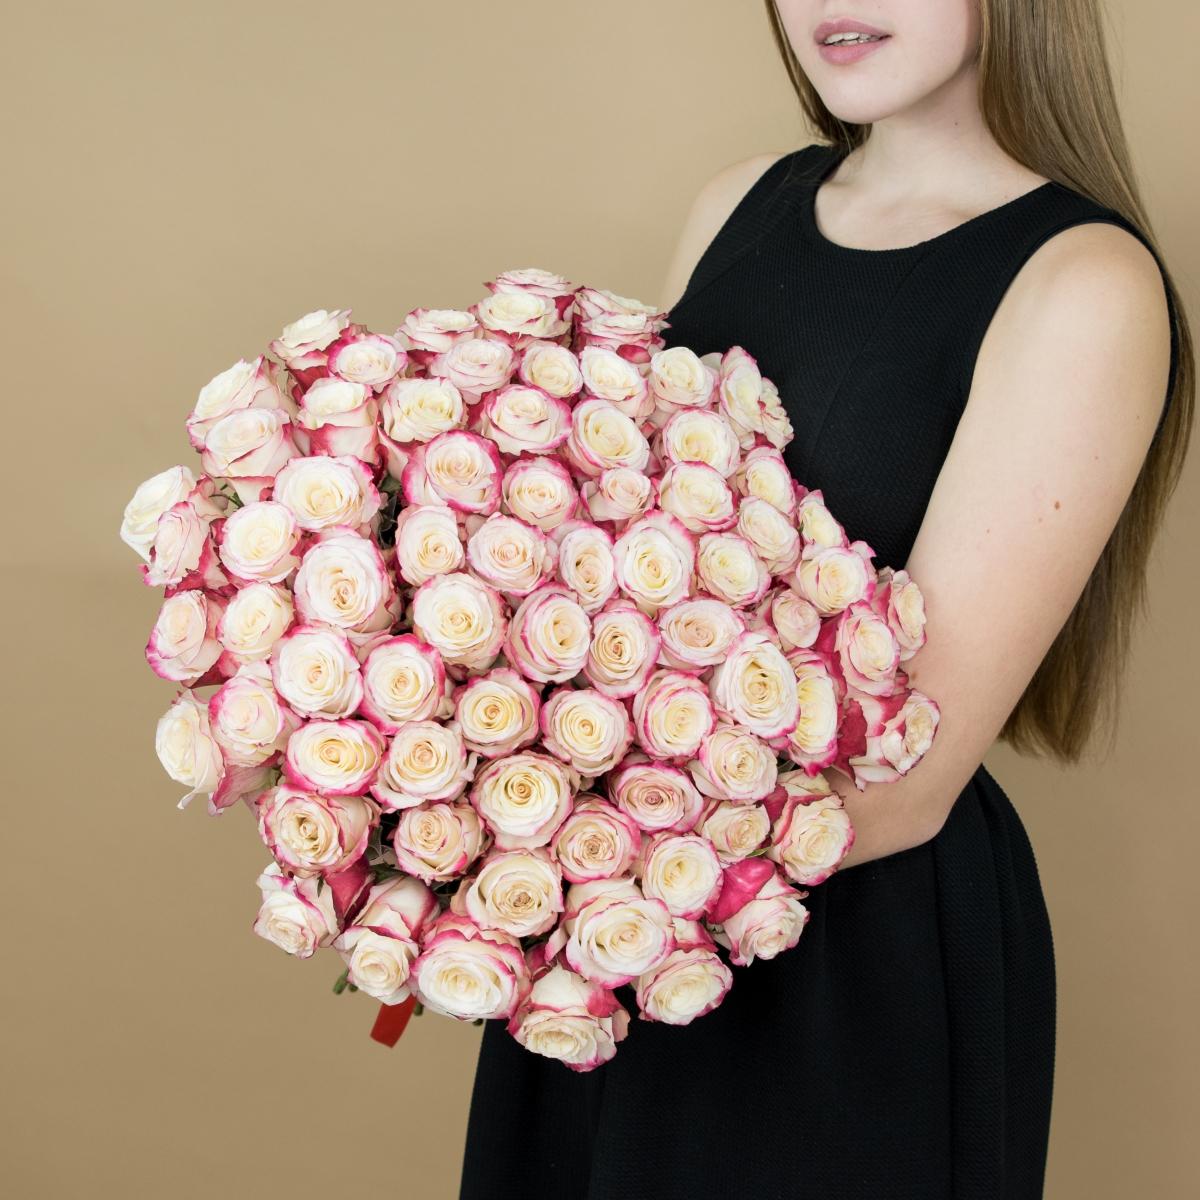 Розы красно-белые 101 шт. (40 см) артикул букета  89712